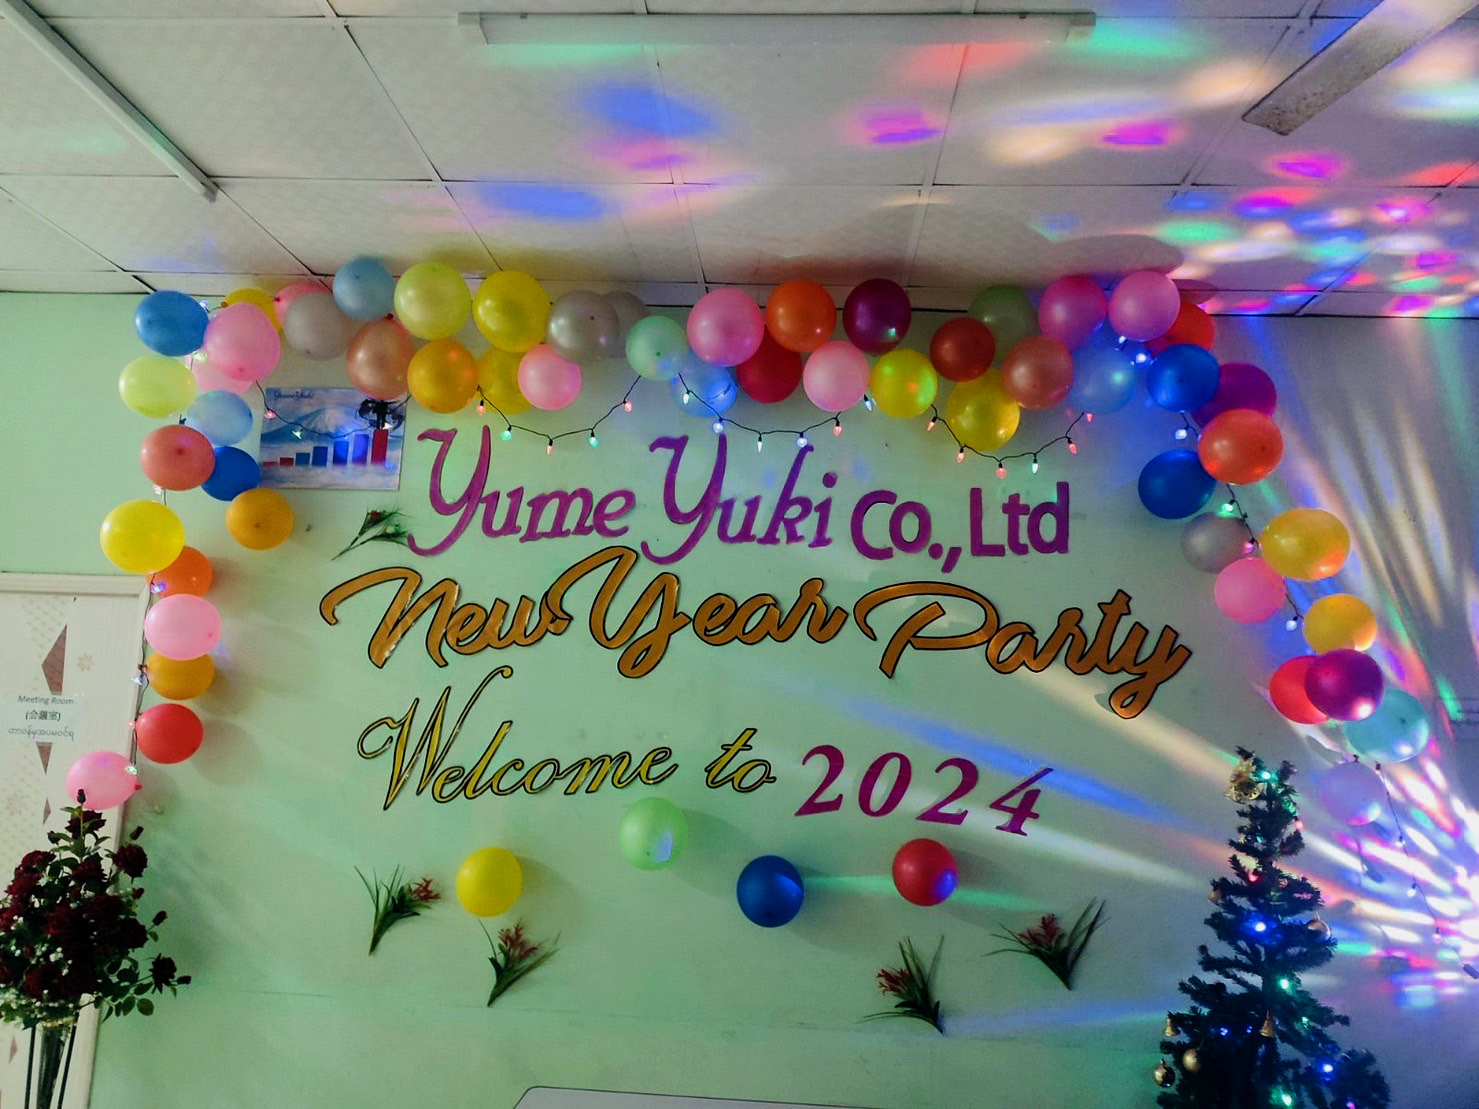 new year party in YumeYuki office